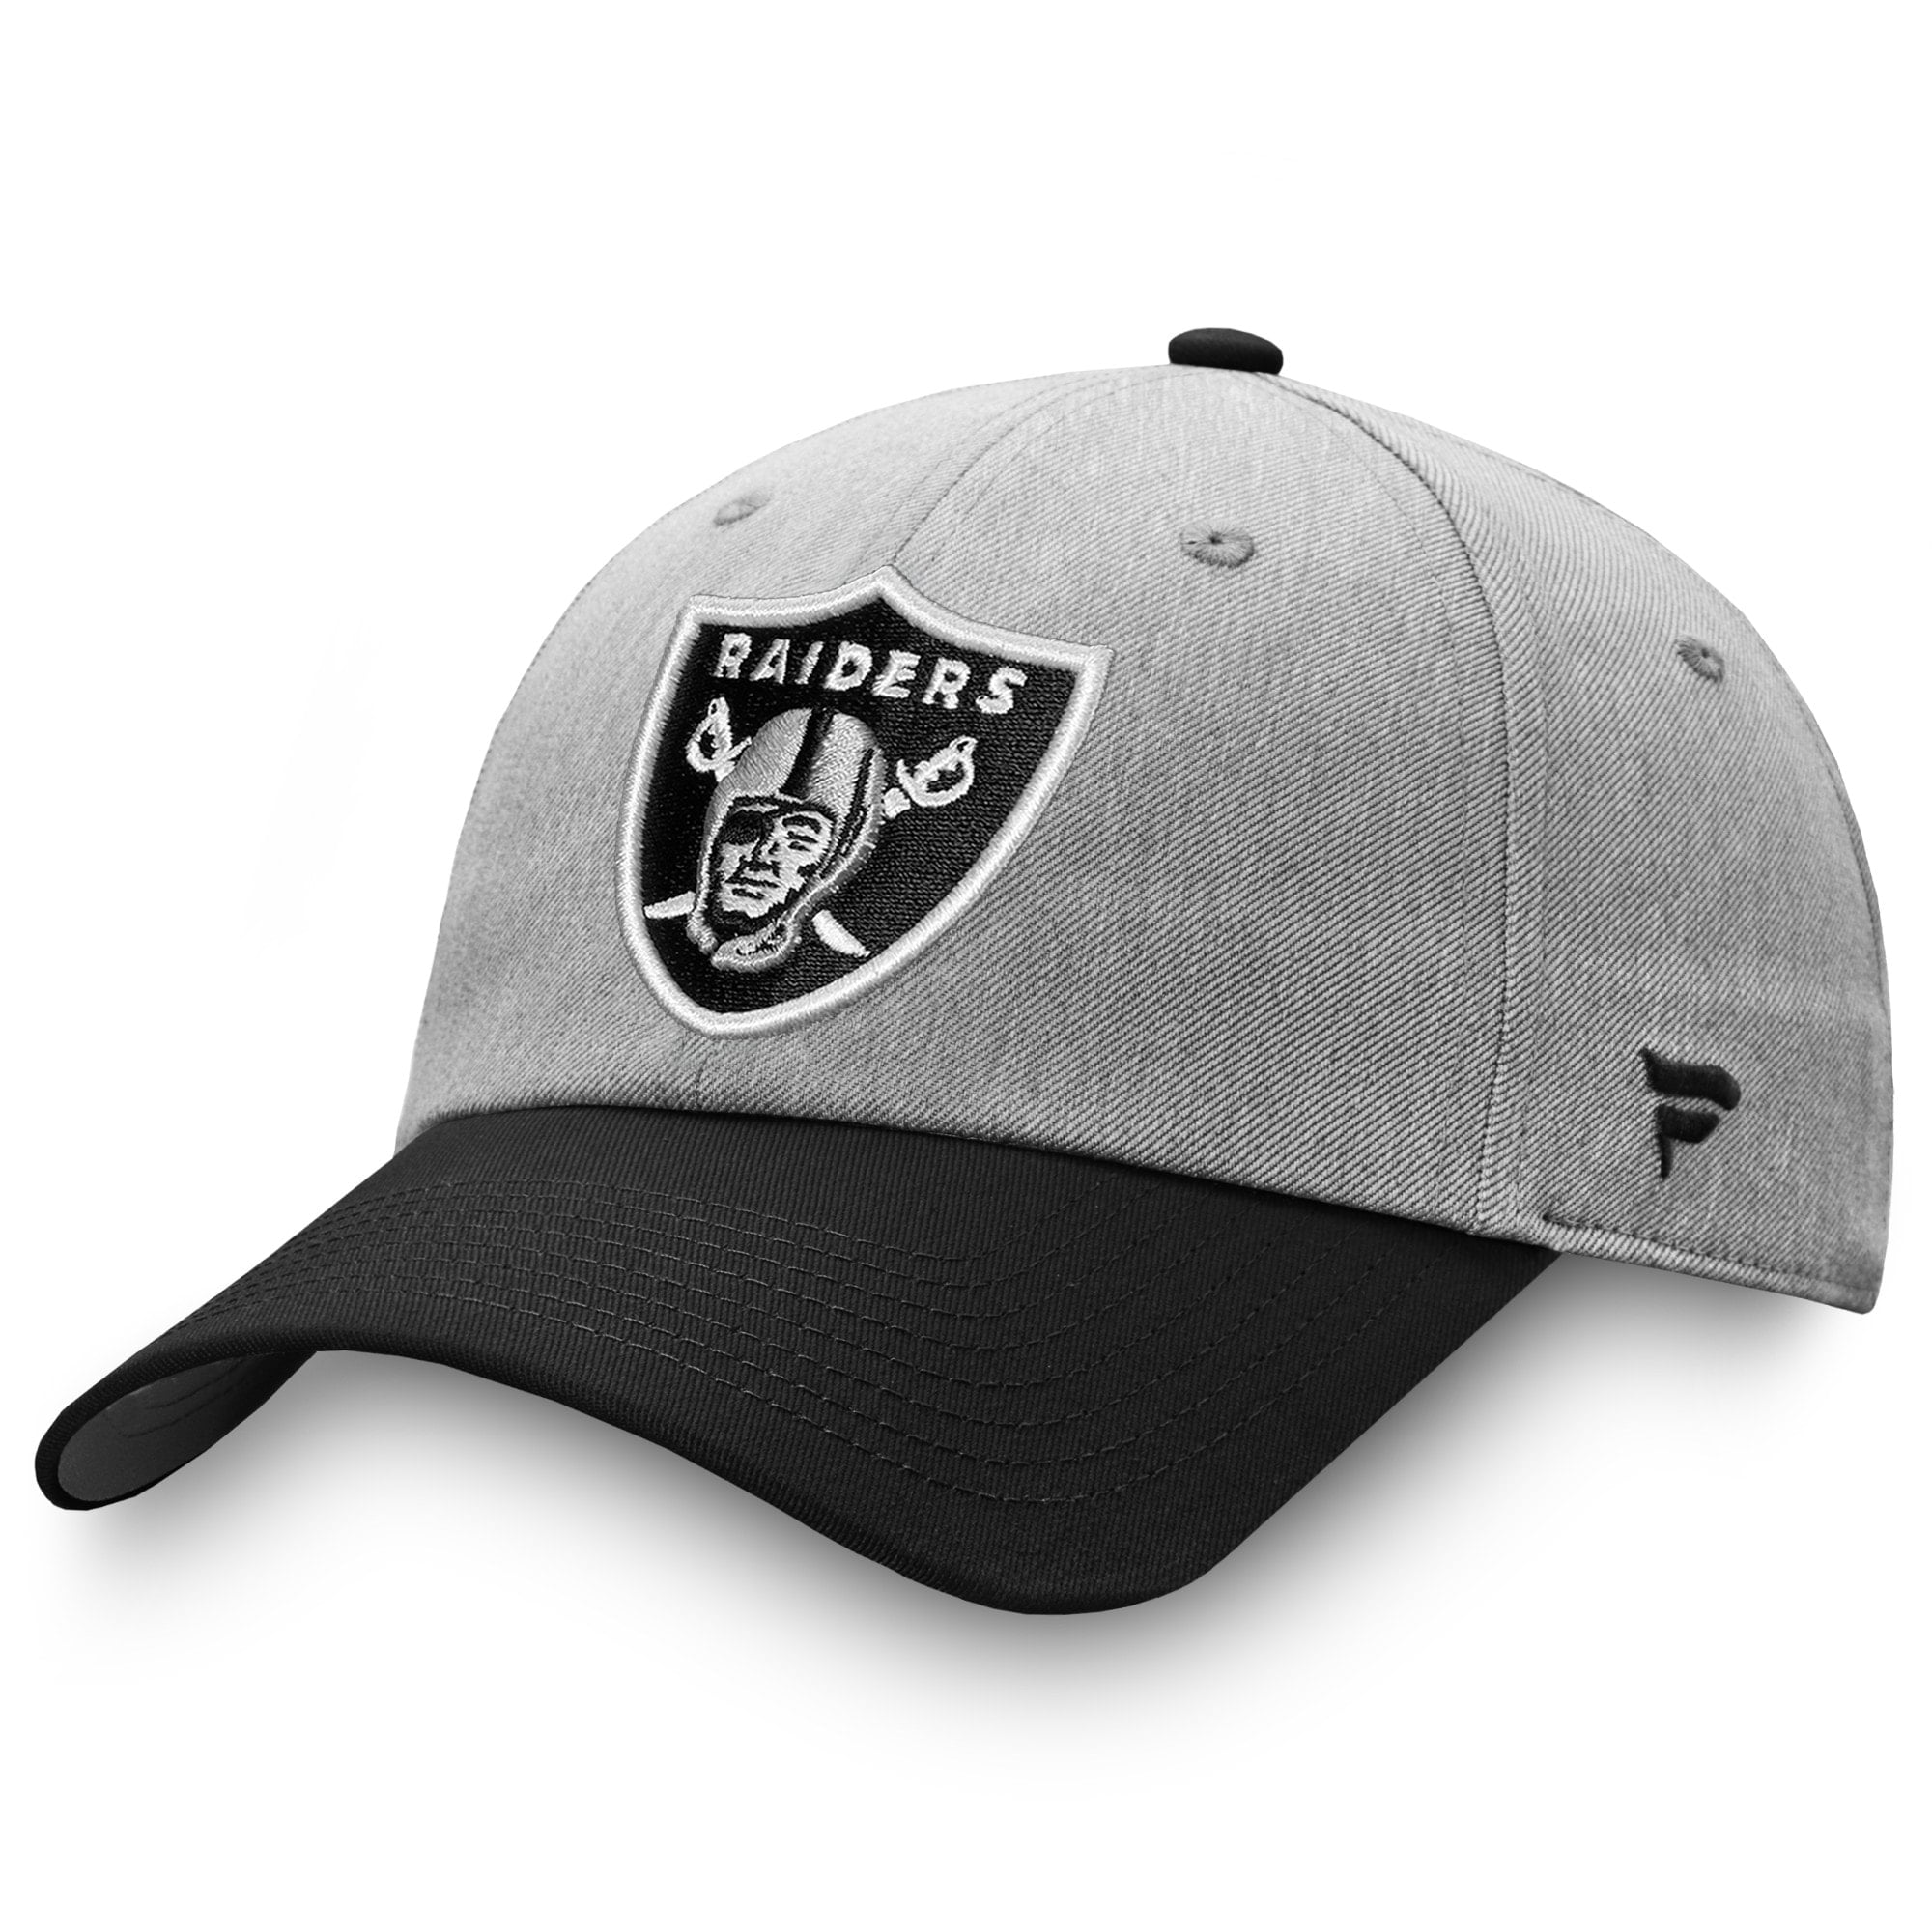 BLACK OR WHITE NWT 47 Brand LAS VEGAS RAIDERS Clean Up Adjustable Hat Cap 